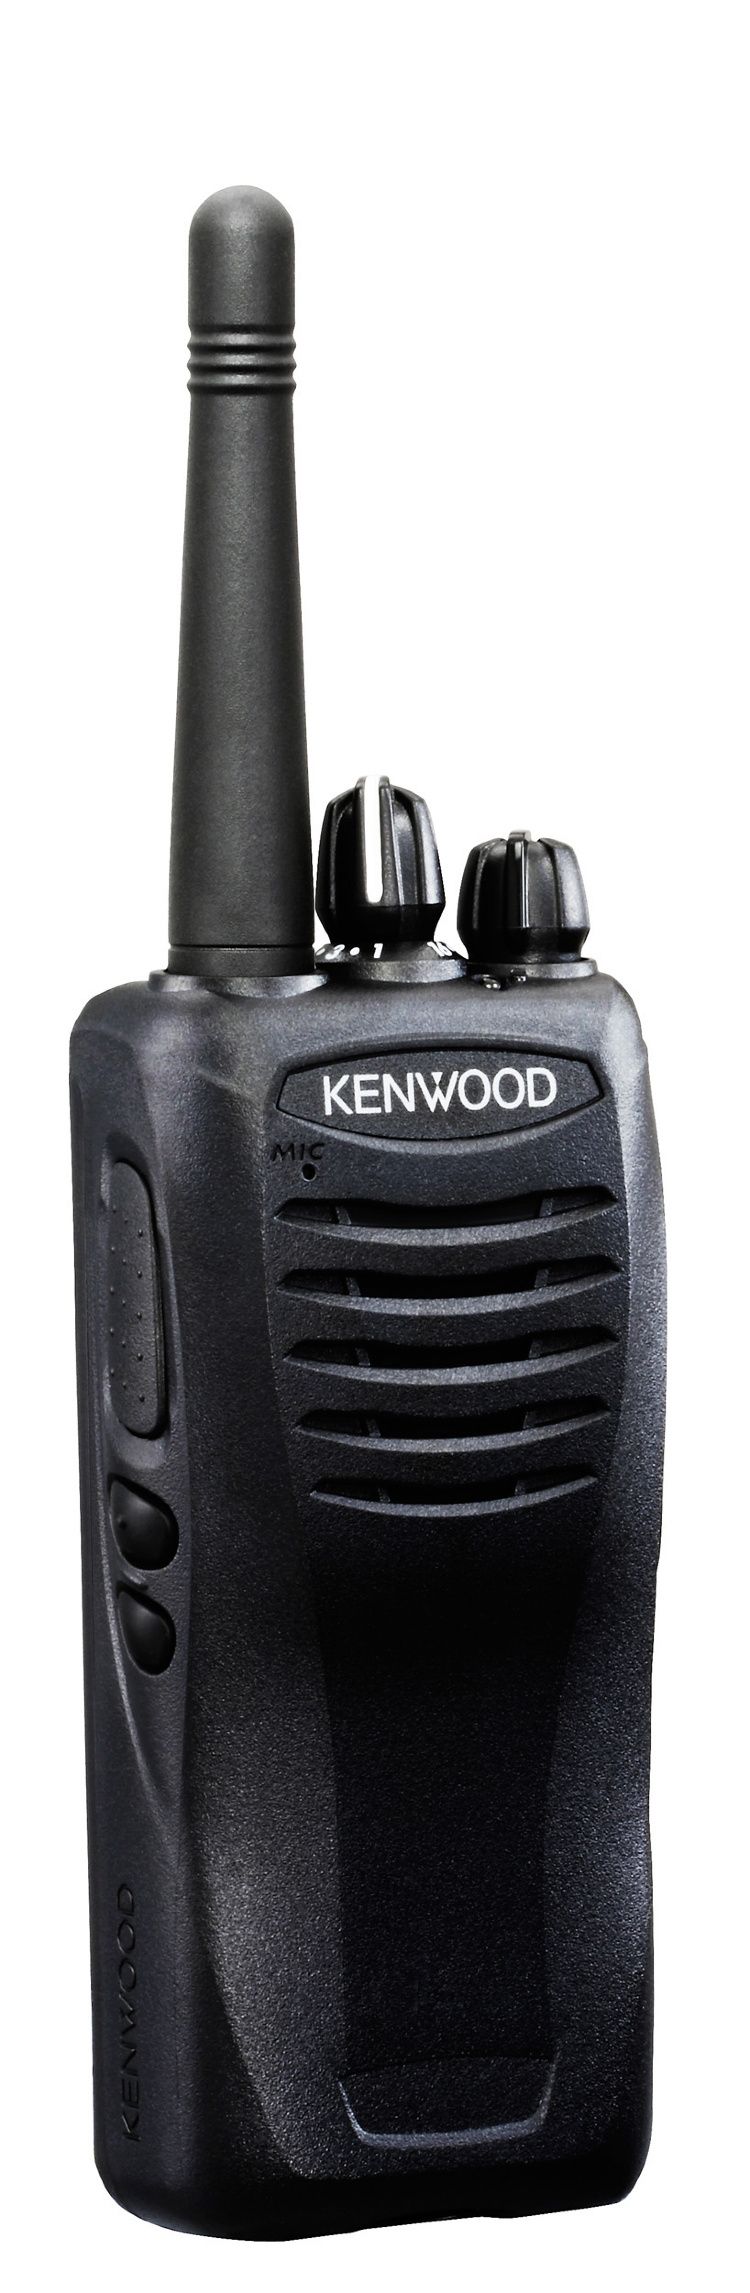 Kenwood TK-2406M, фото